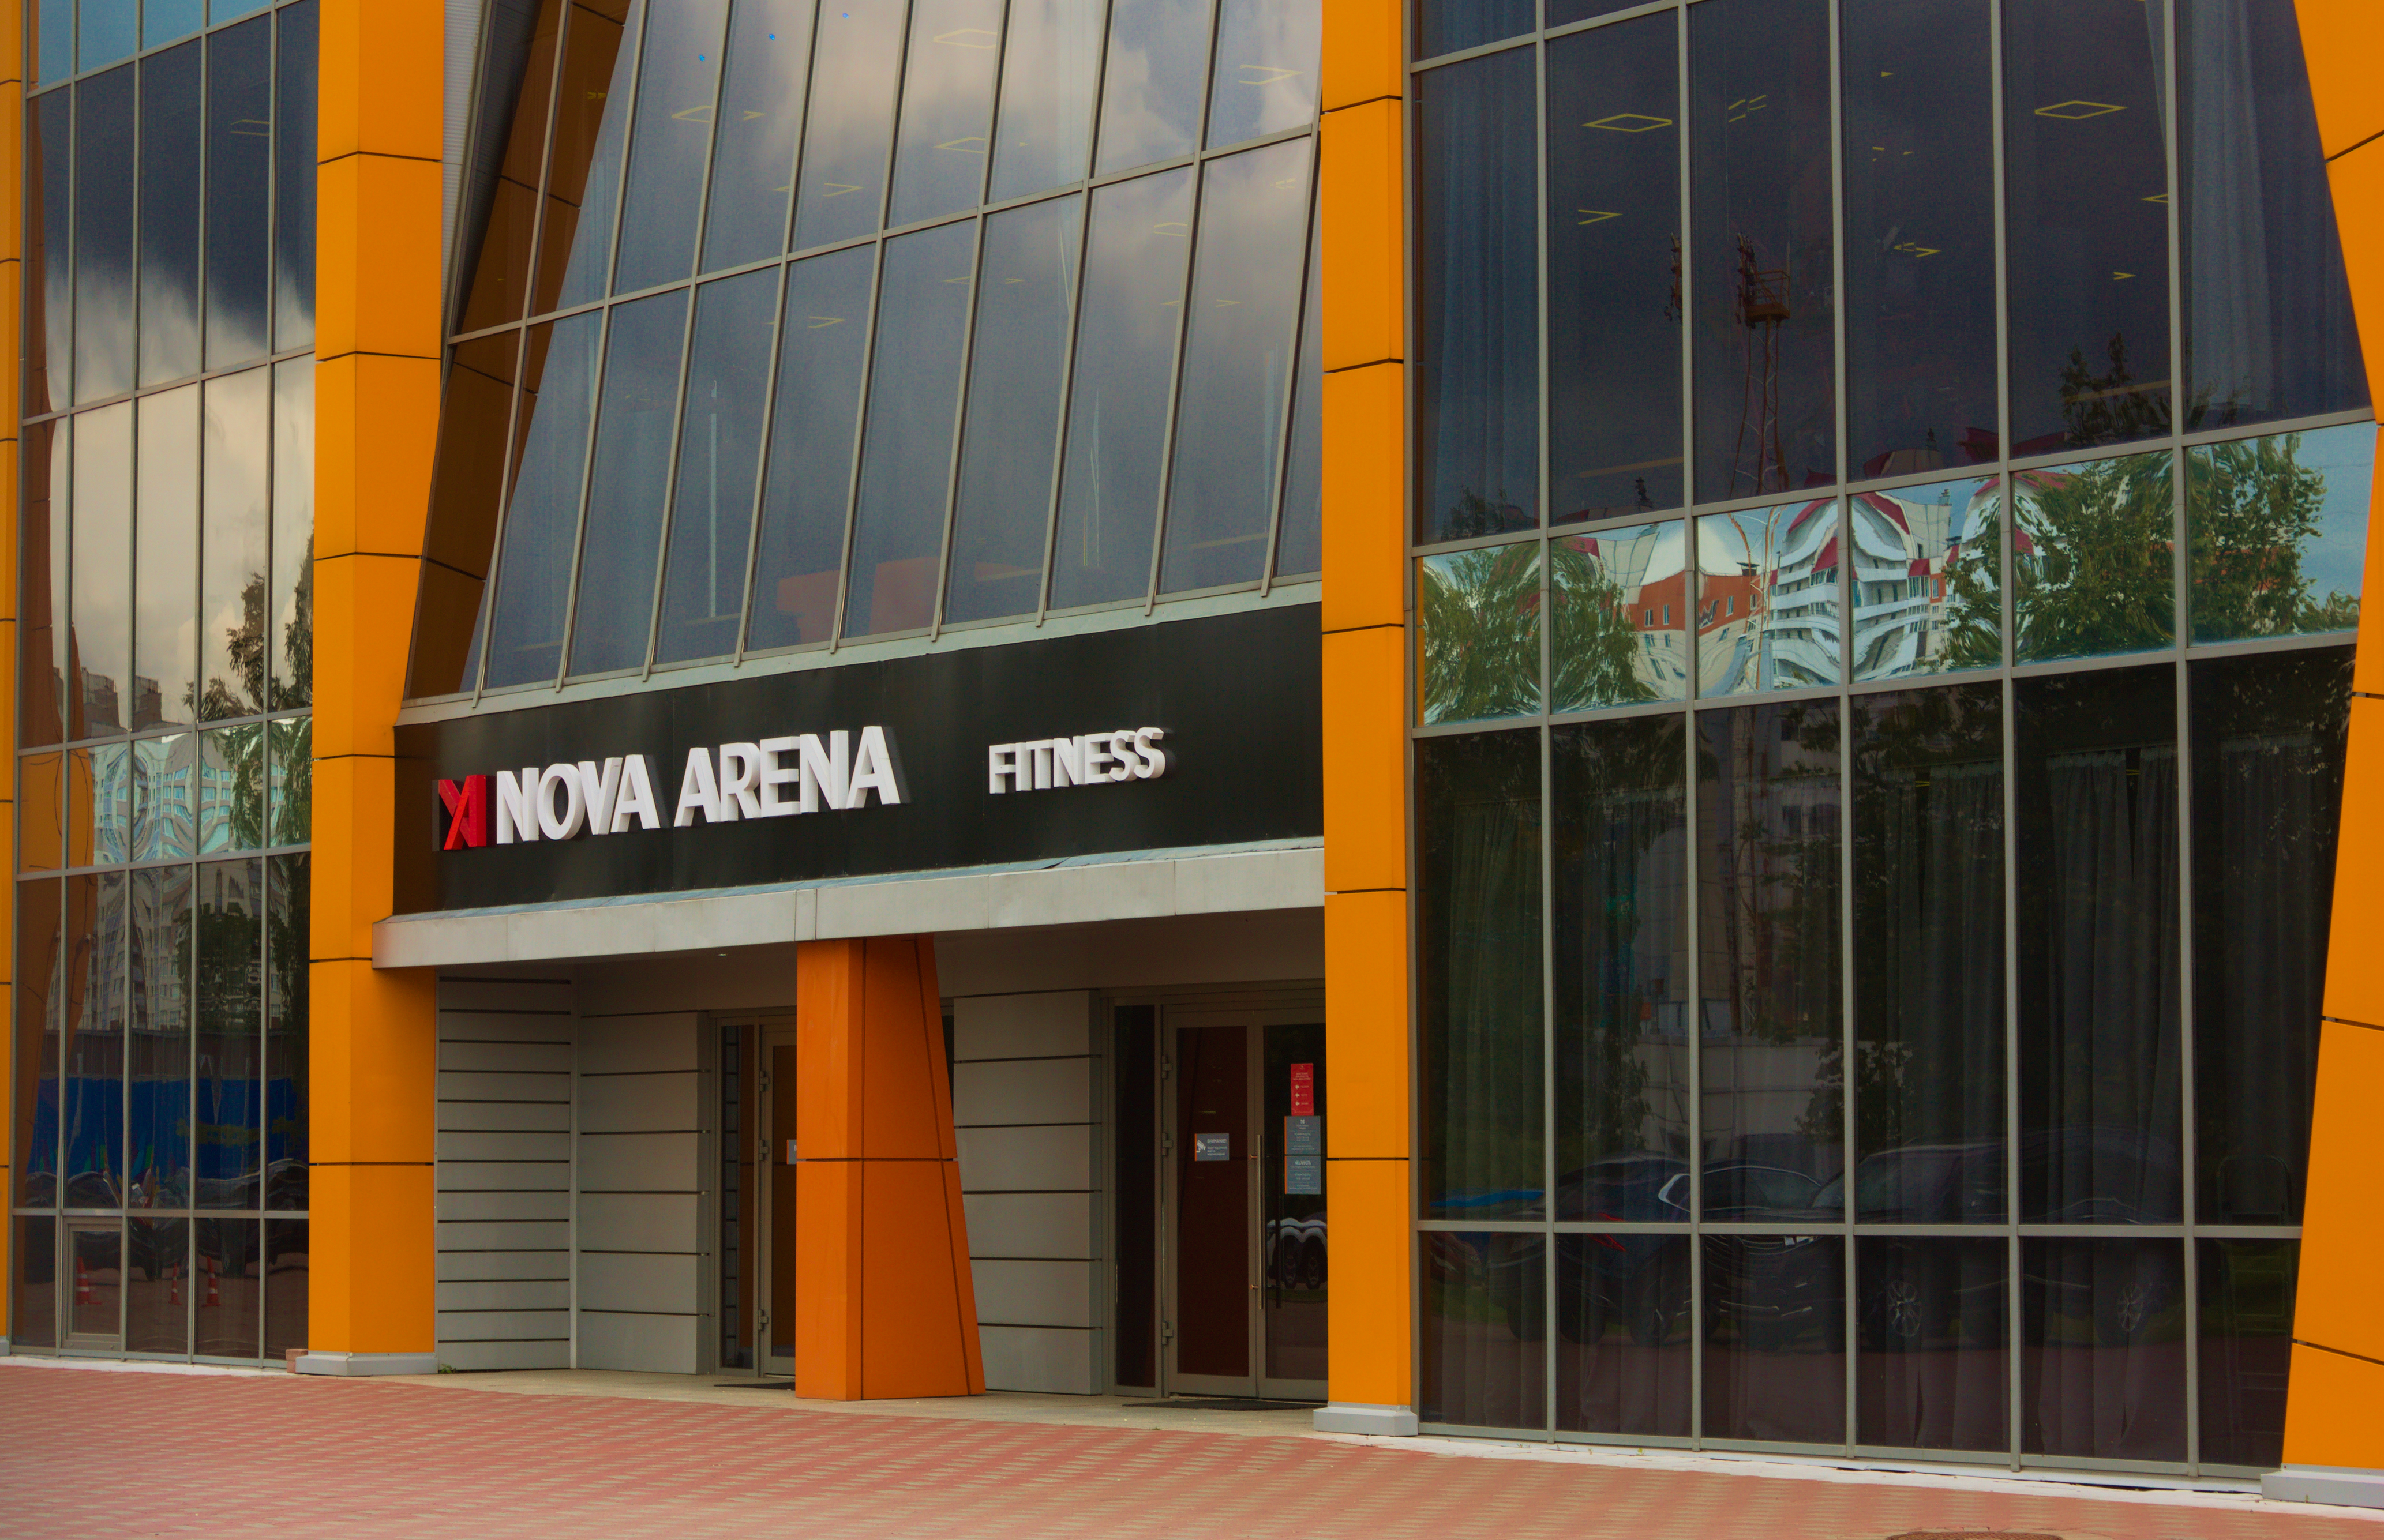 The “Nova Arena” Sports complex